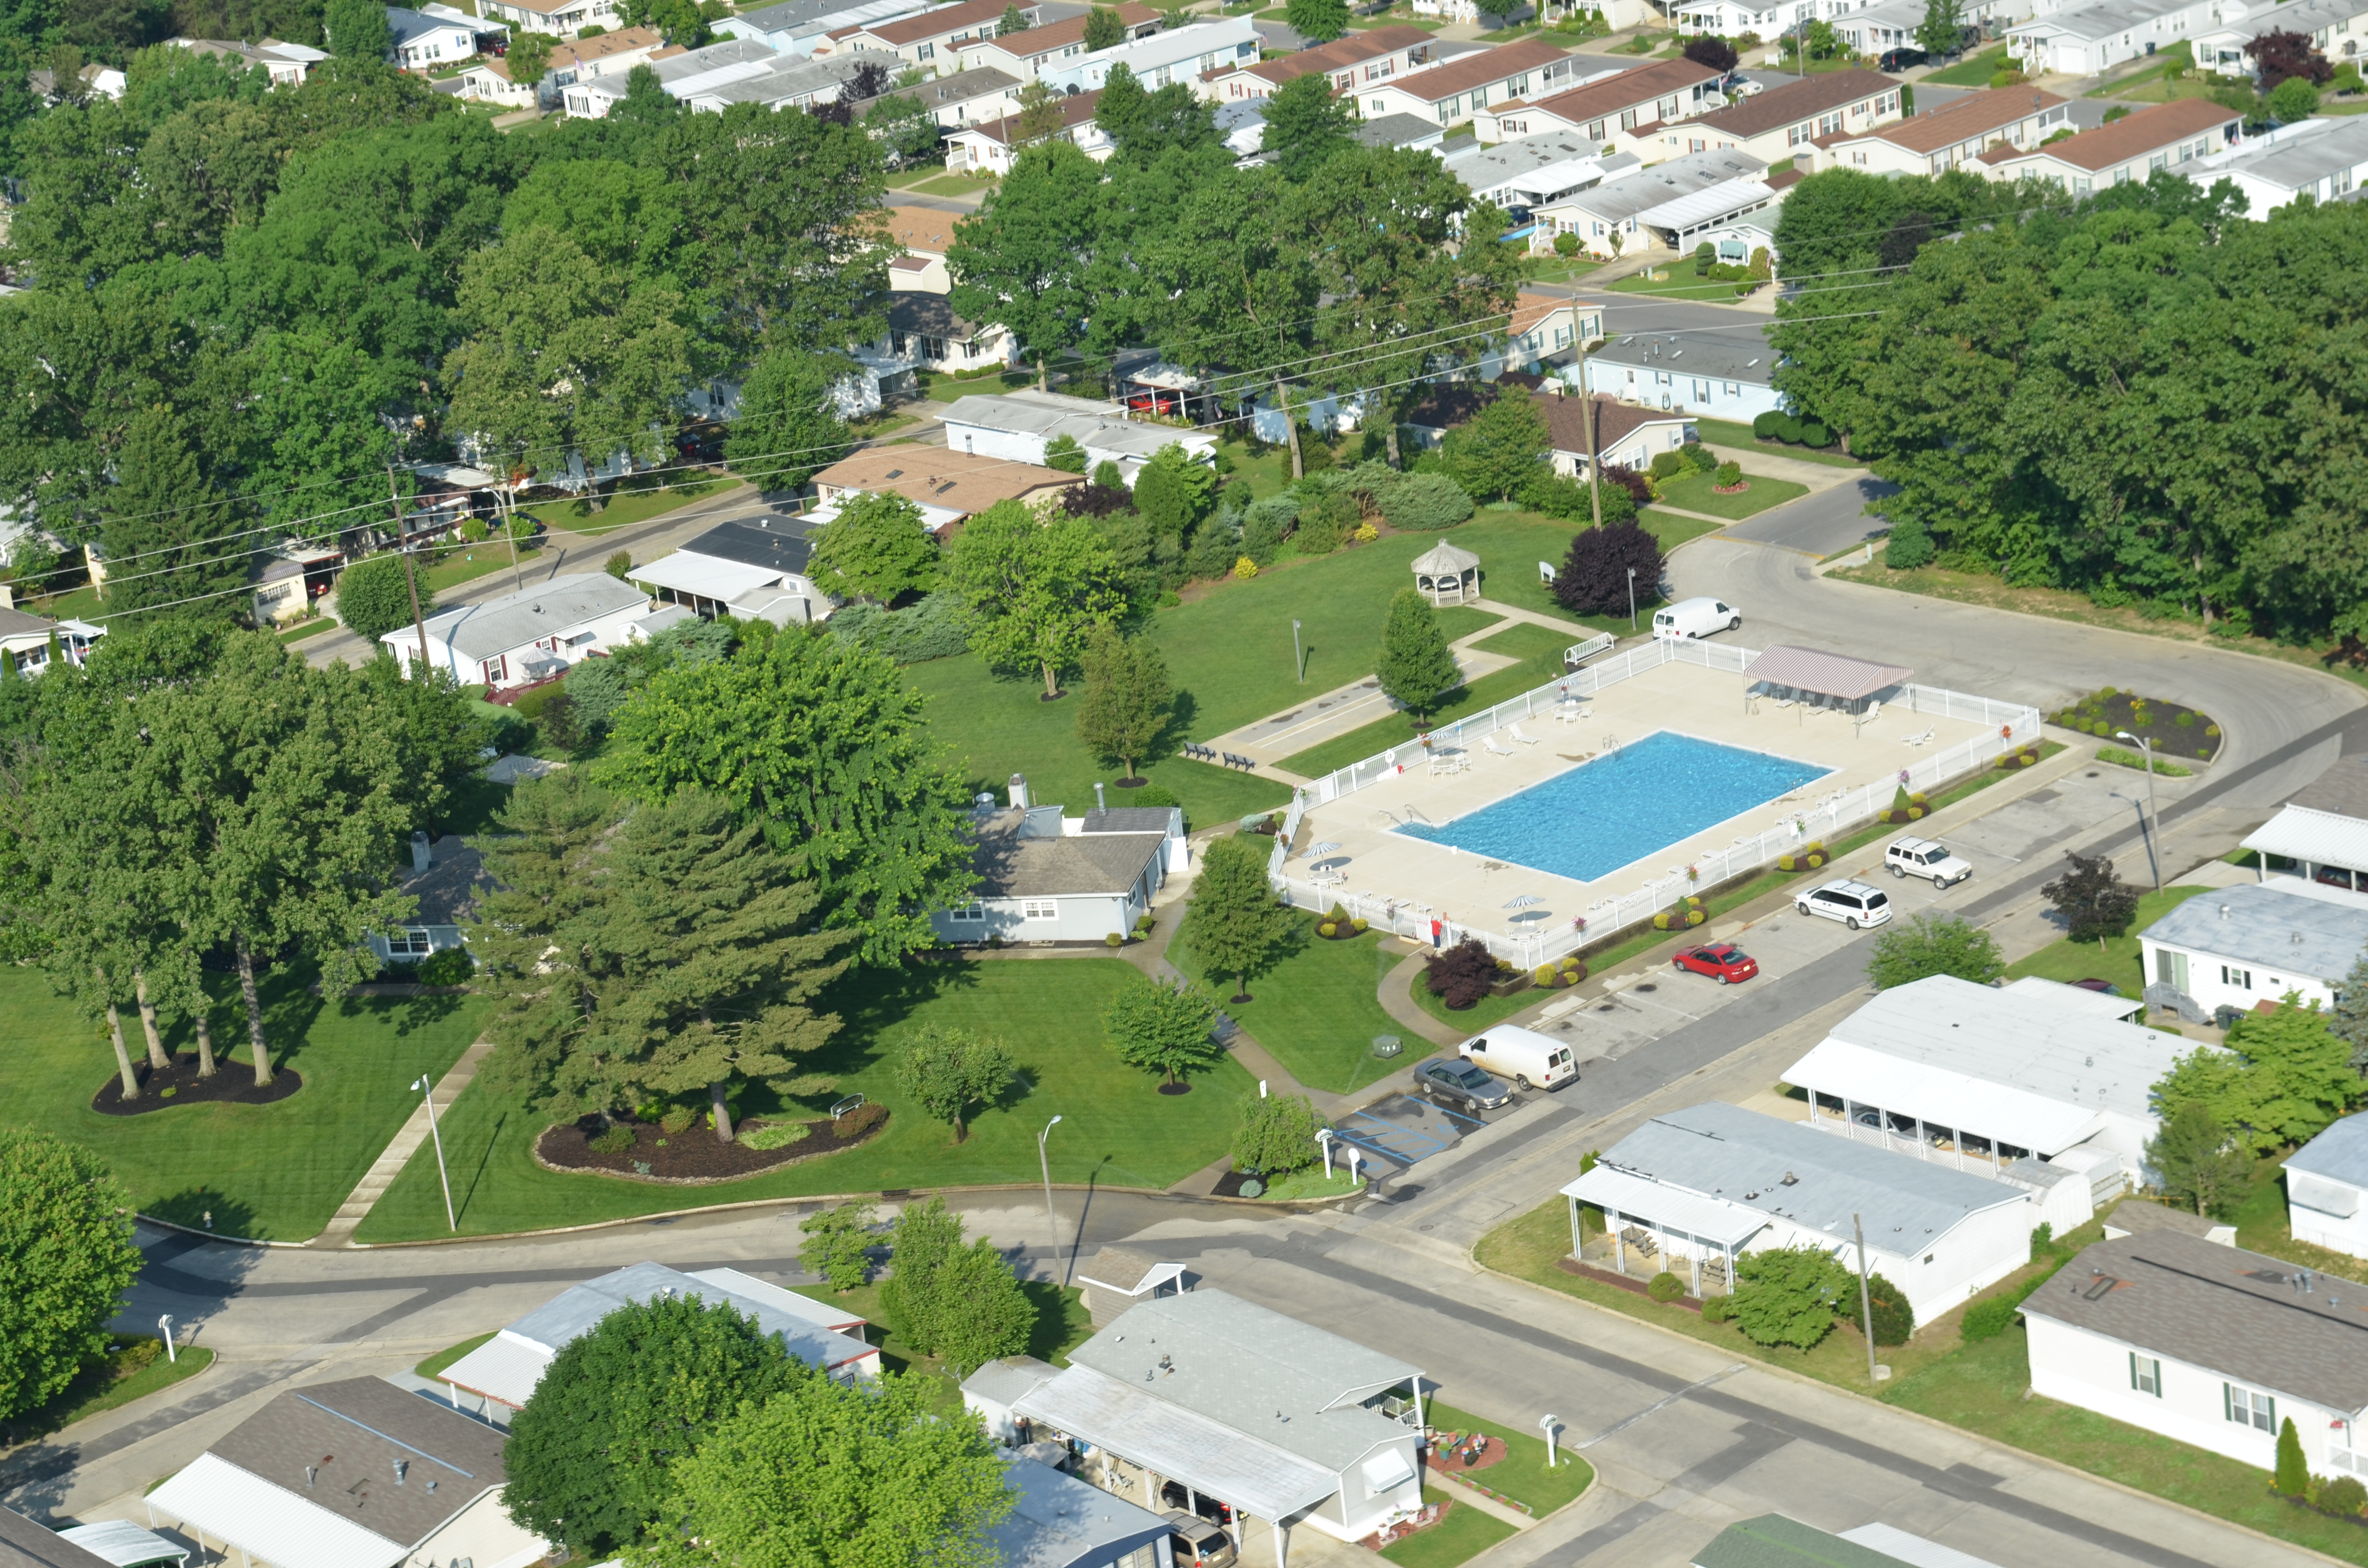 Aerial View of Summerfields Friendly Village